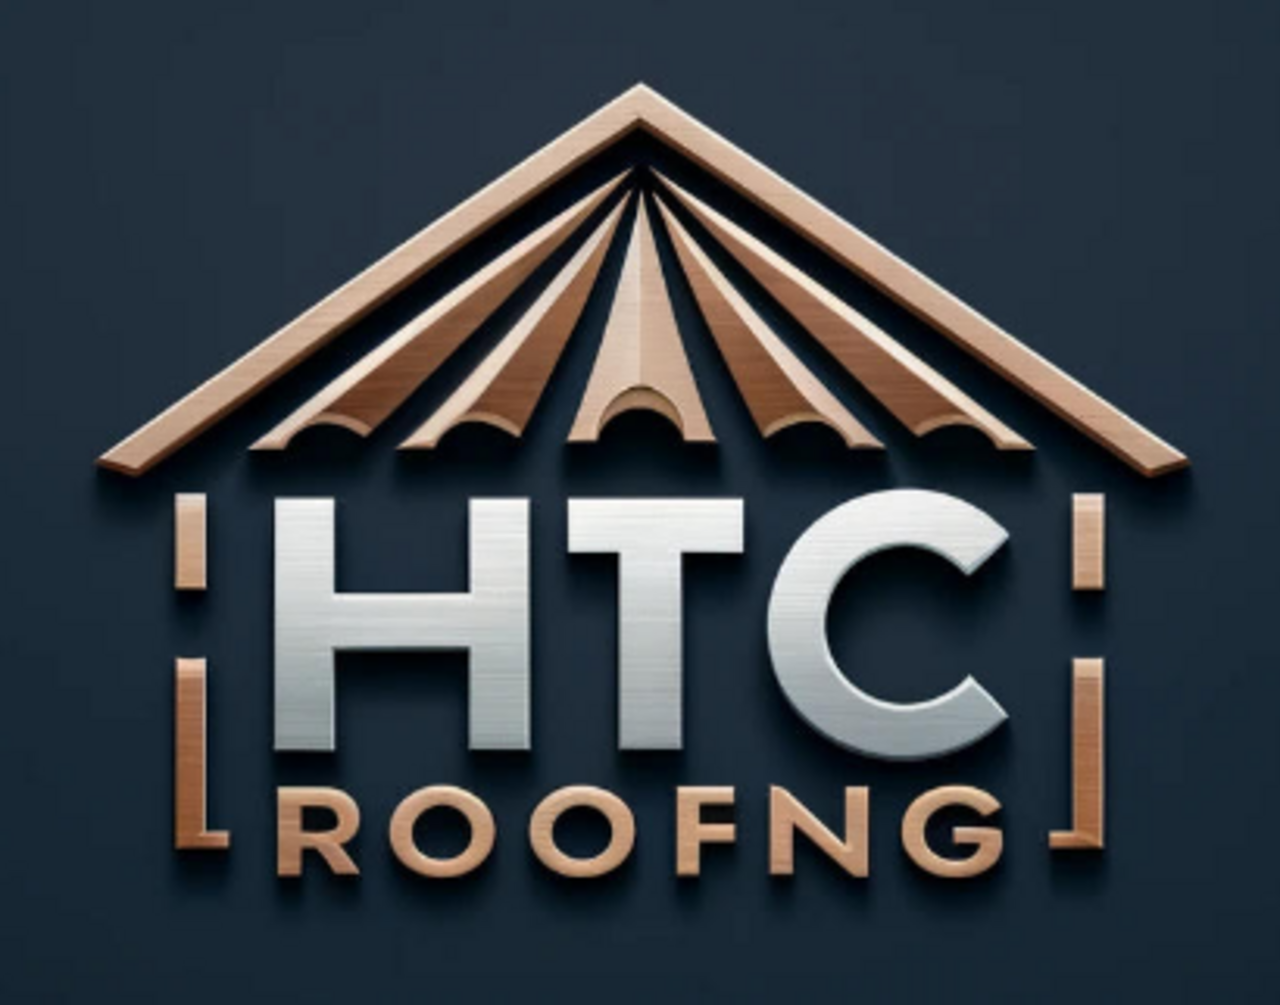 HTC Roofing Ltd.'s logo